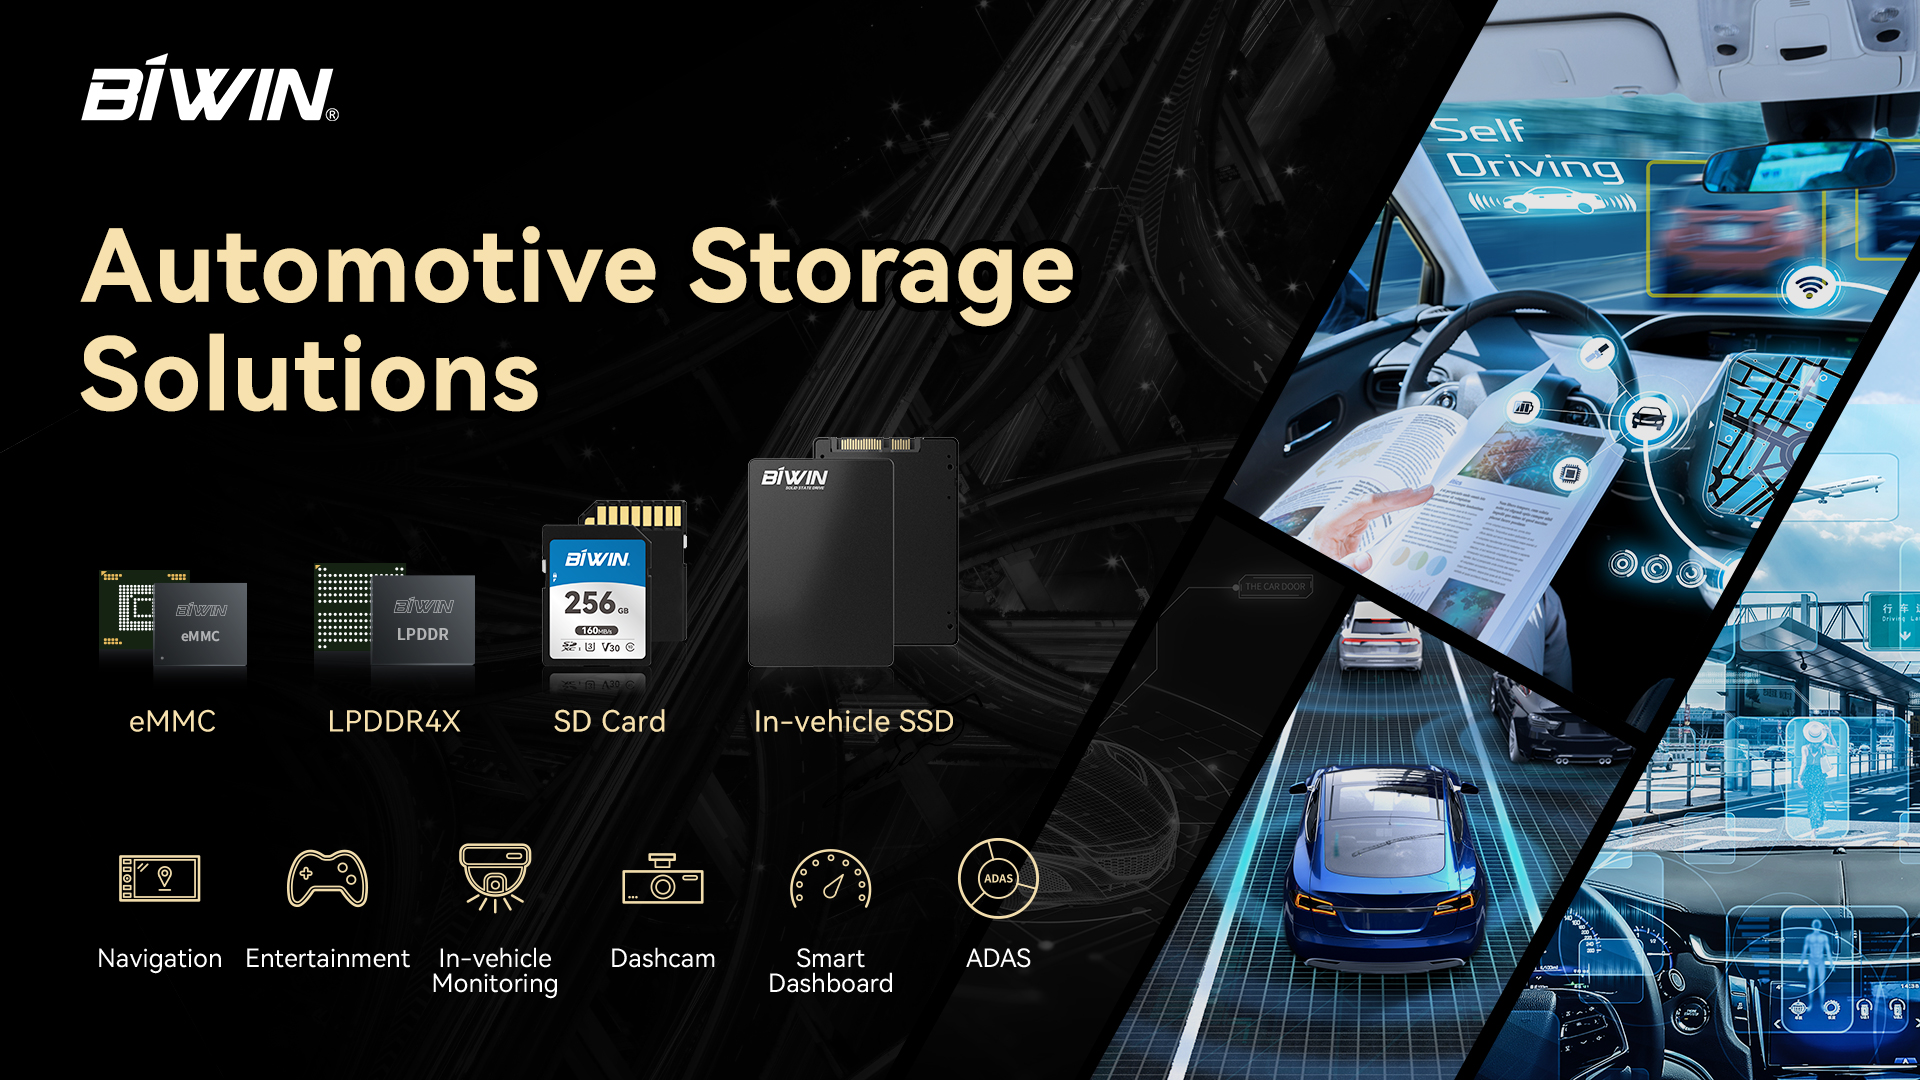 BIWIN Automotive Storage Solutions